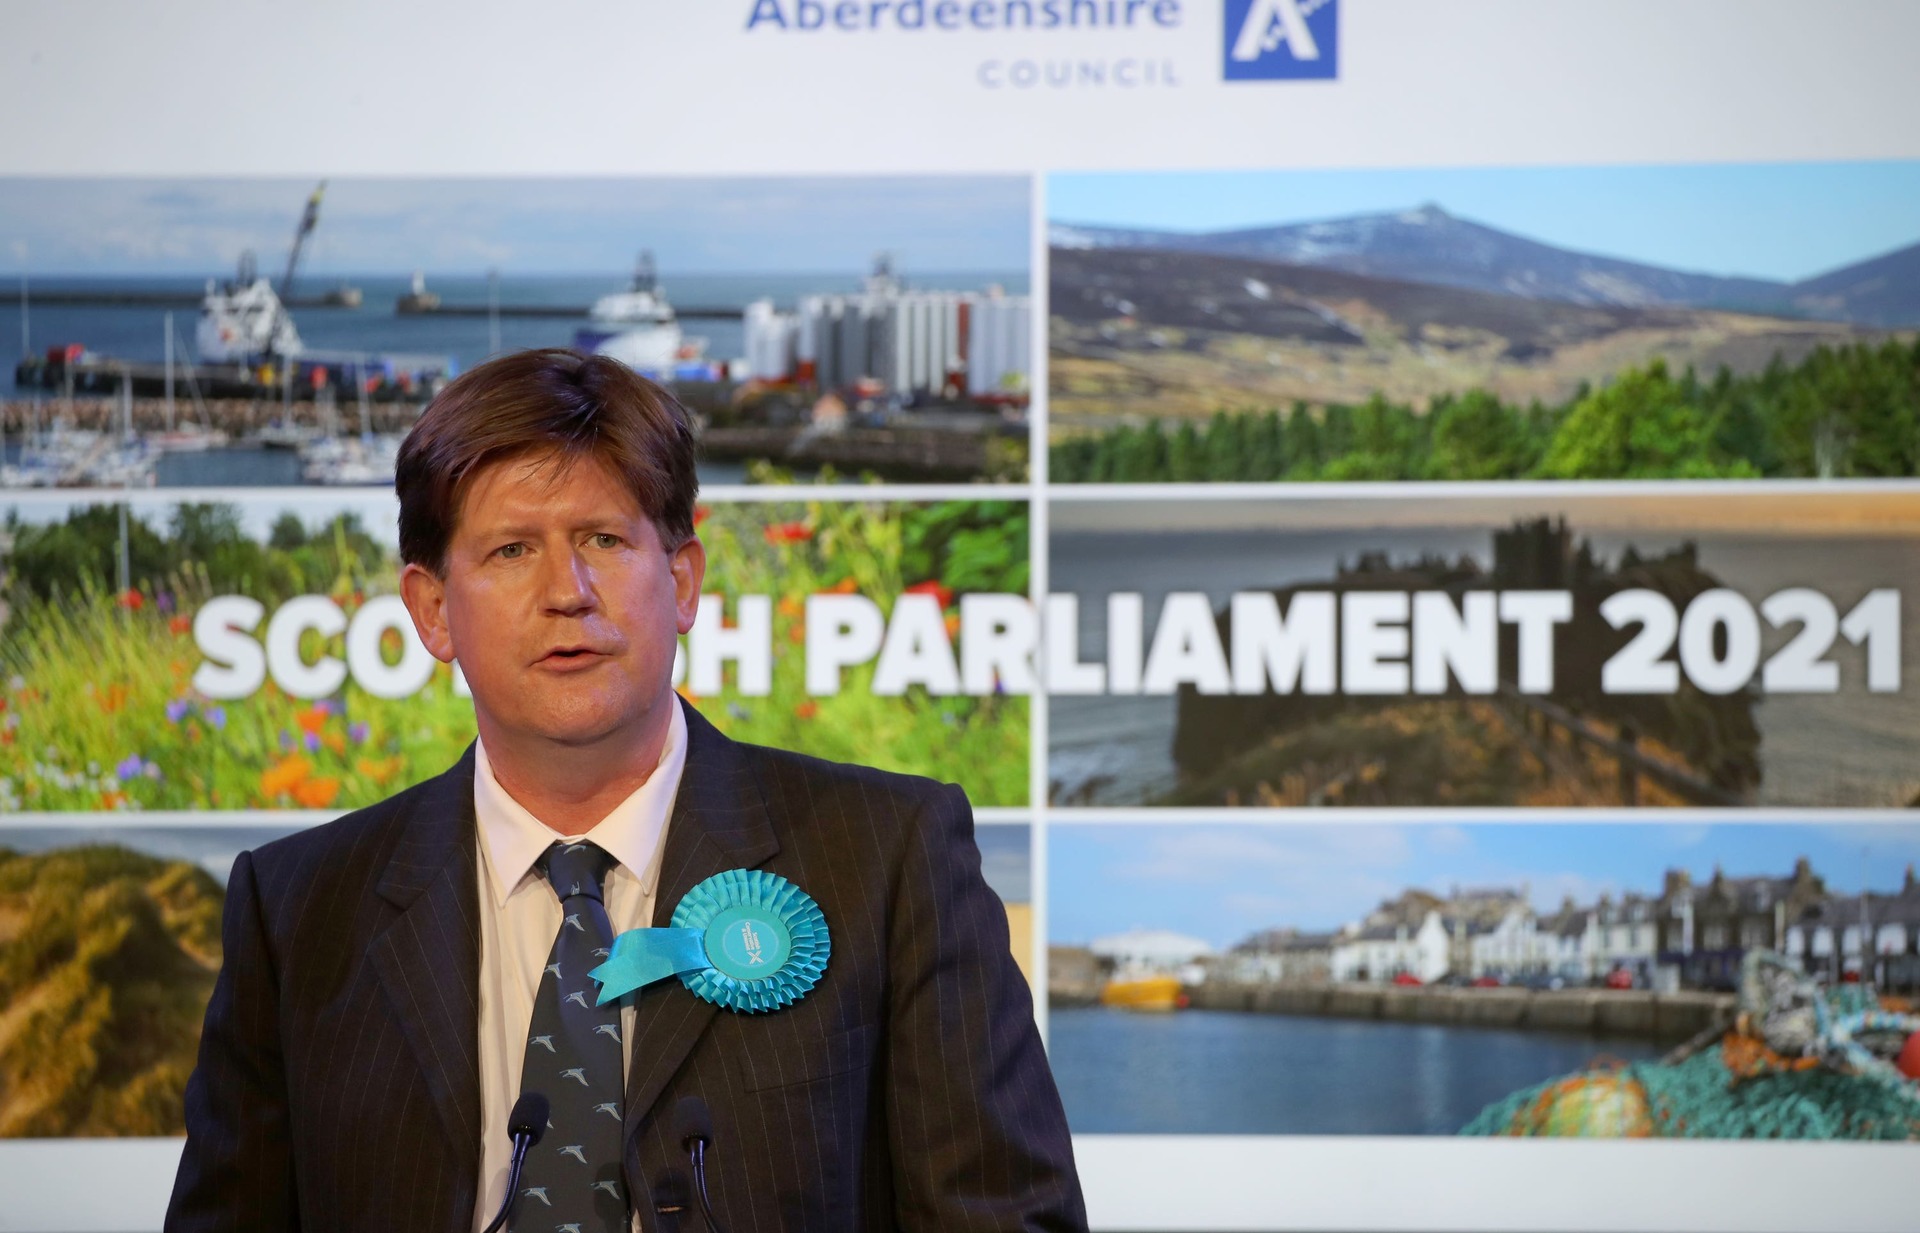 Alexander Burnett said the SNP is 'in the grip of a civil war'.